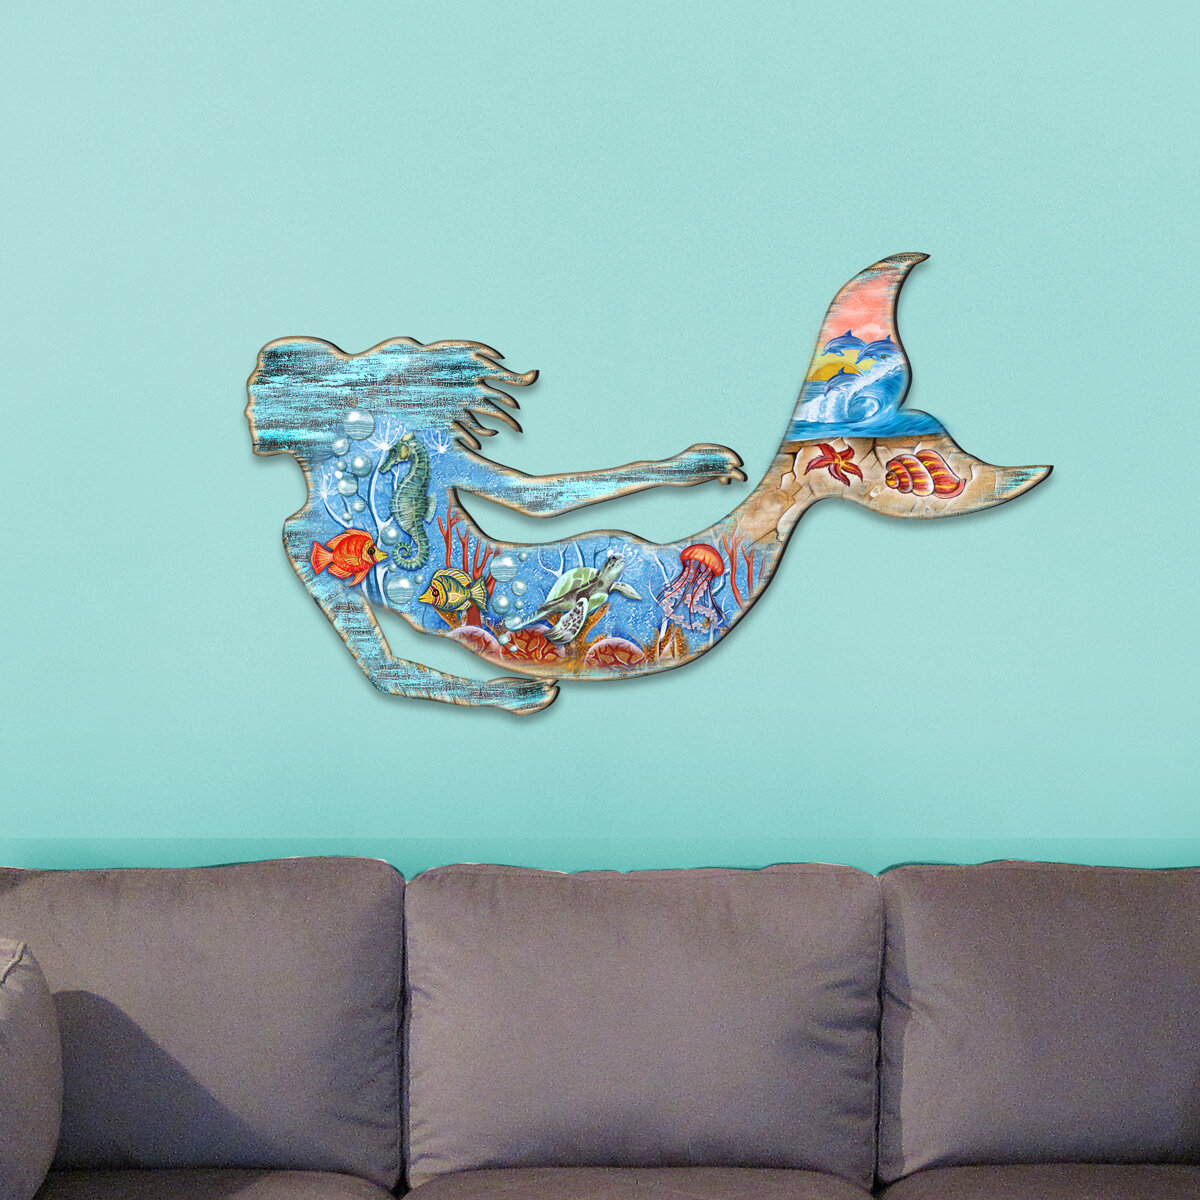 Dovecove Mermaid Wall Decor  Reviews Wayfair